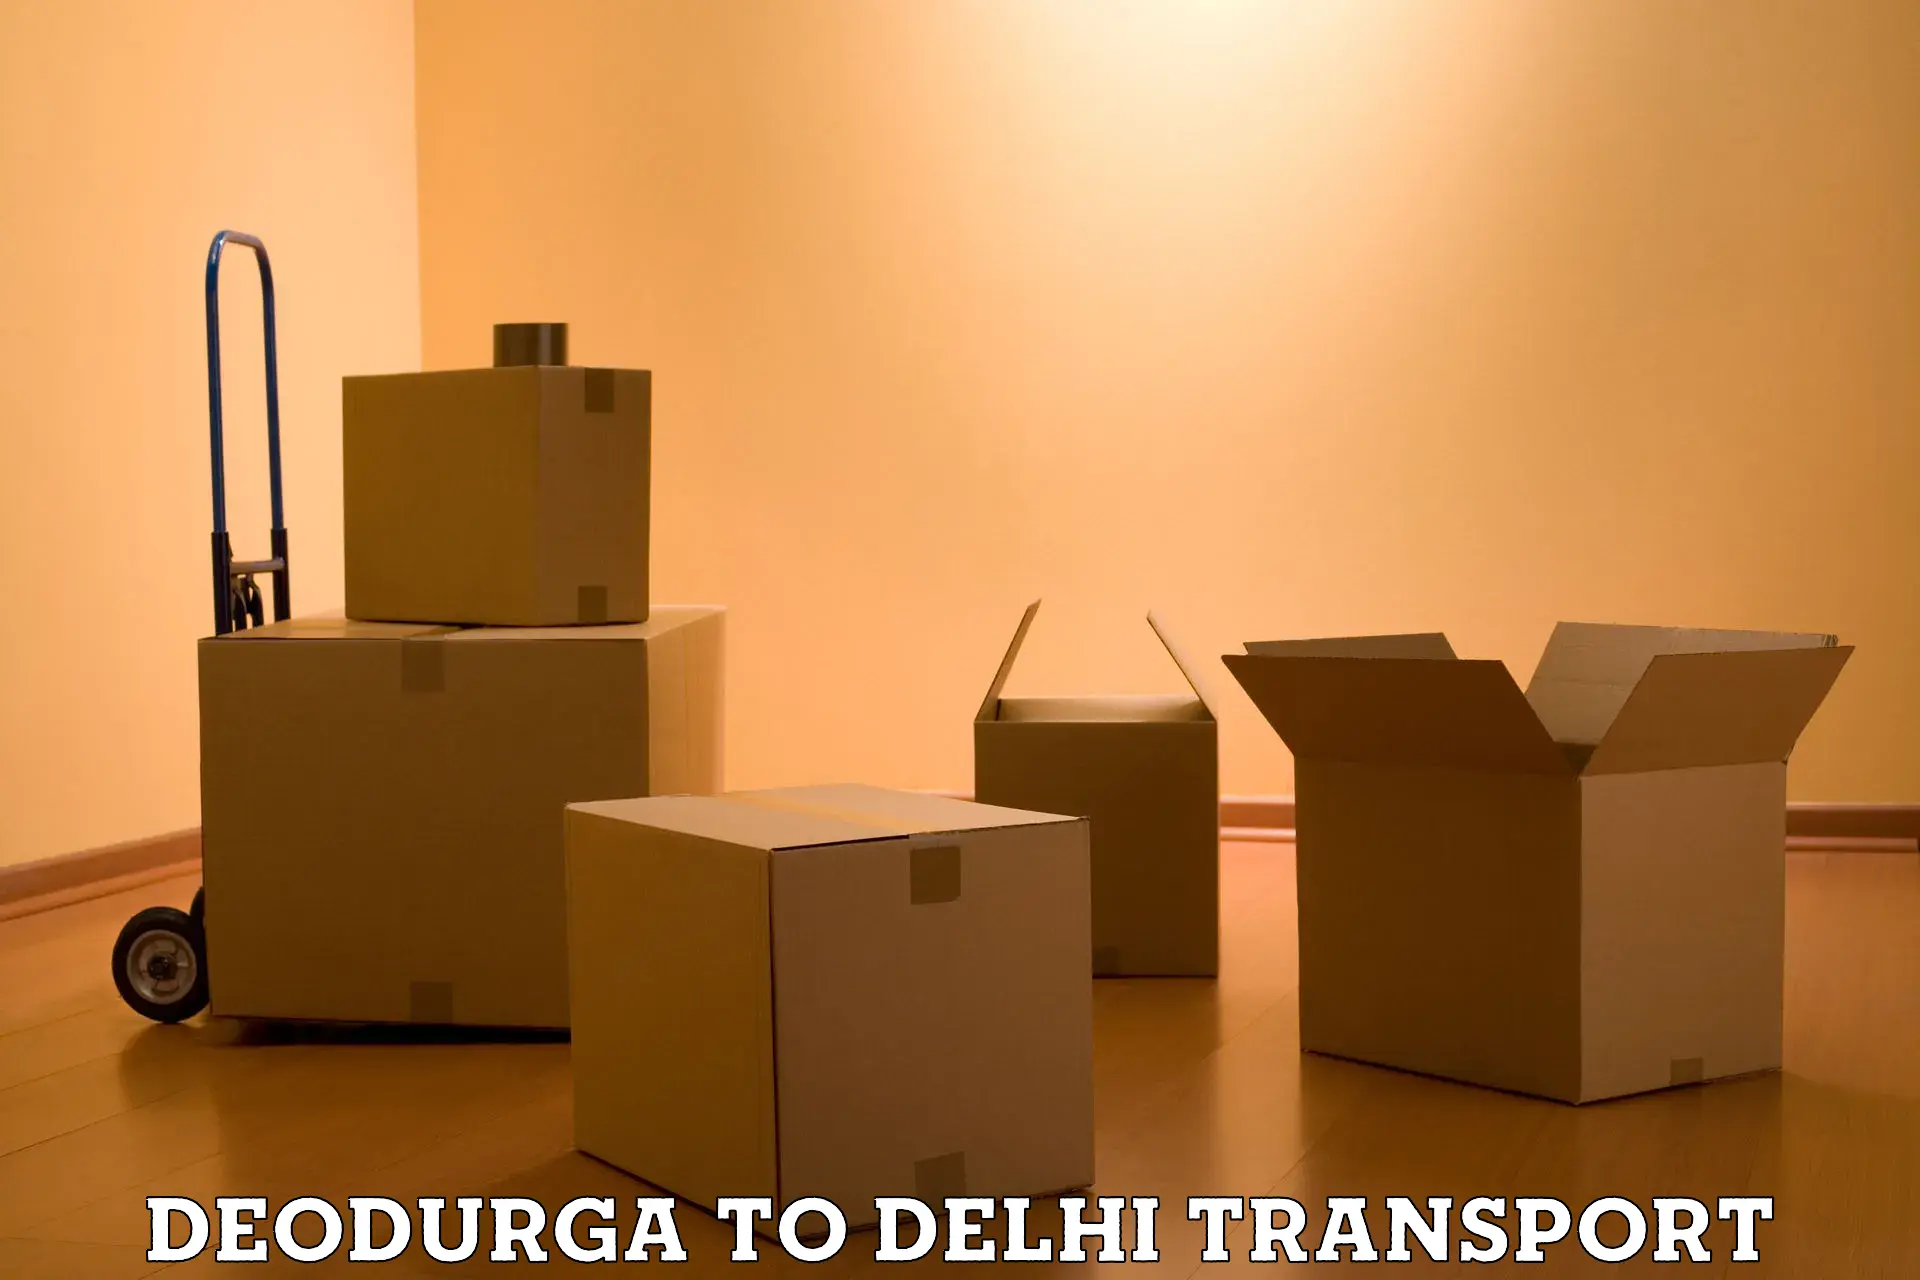 Sending bike to another city Deodurga to Delhi